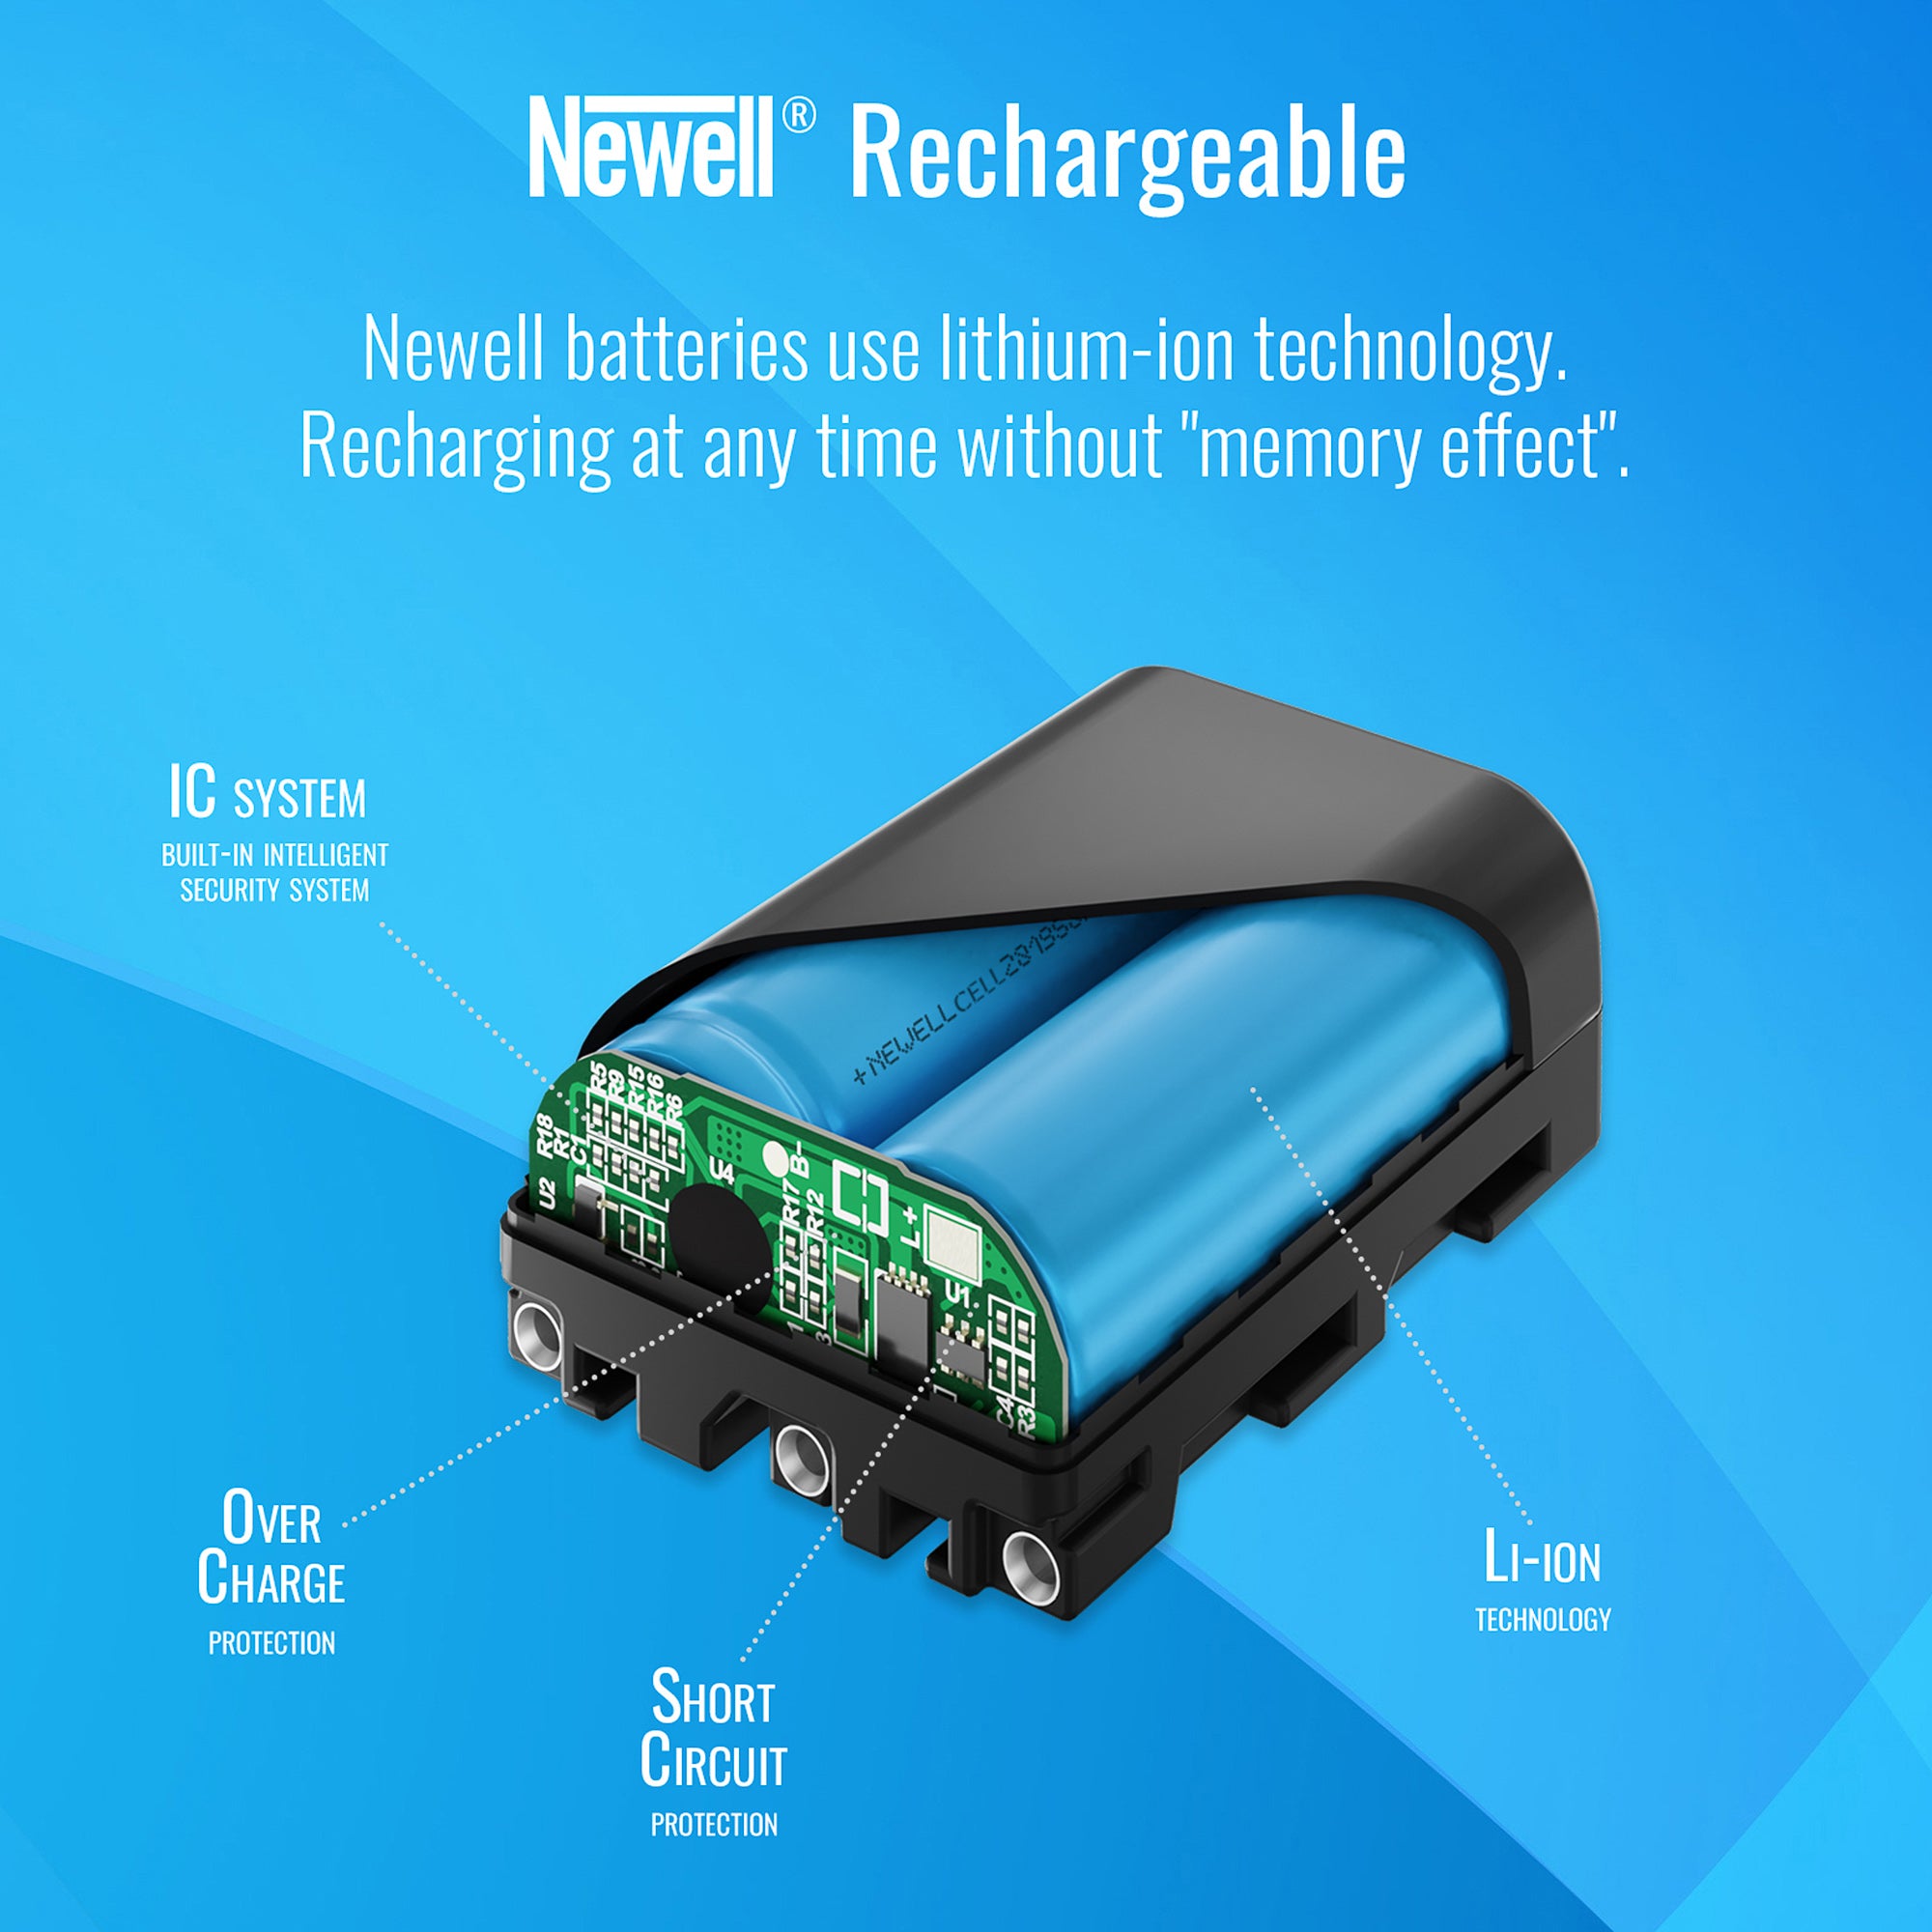 Newell rechargeable Battery D-Li90